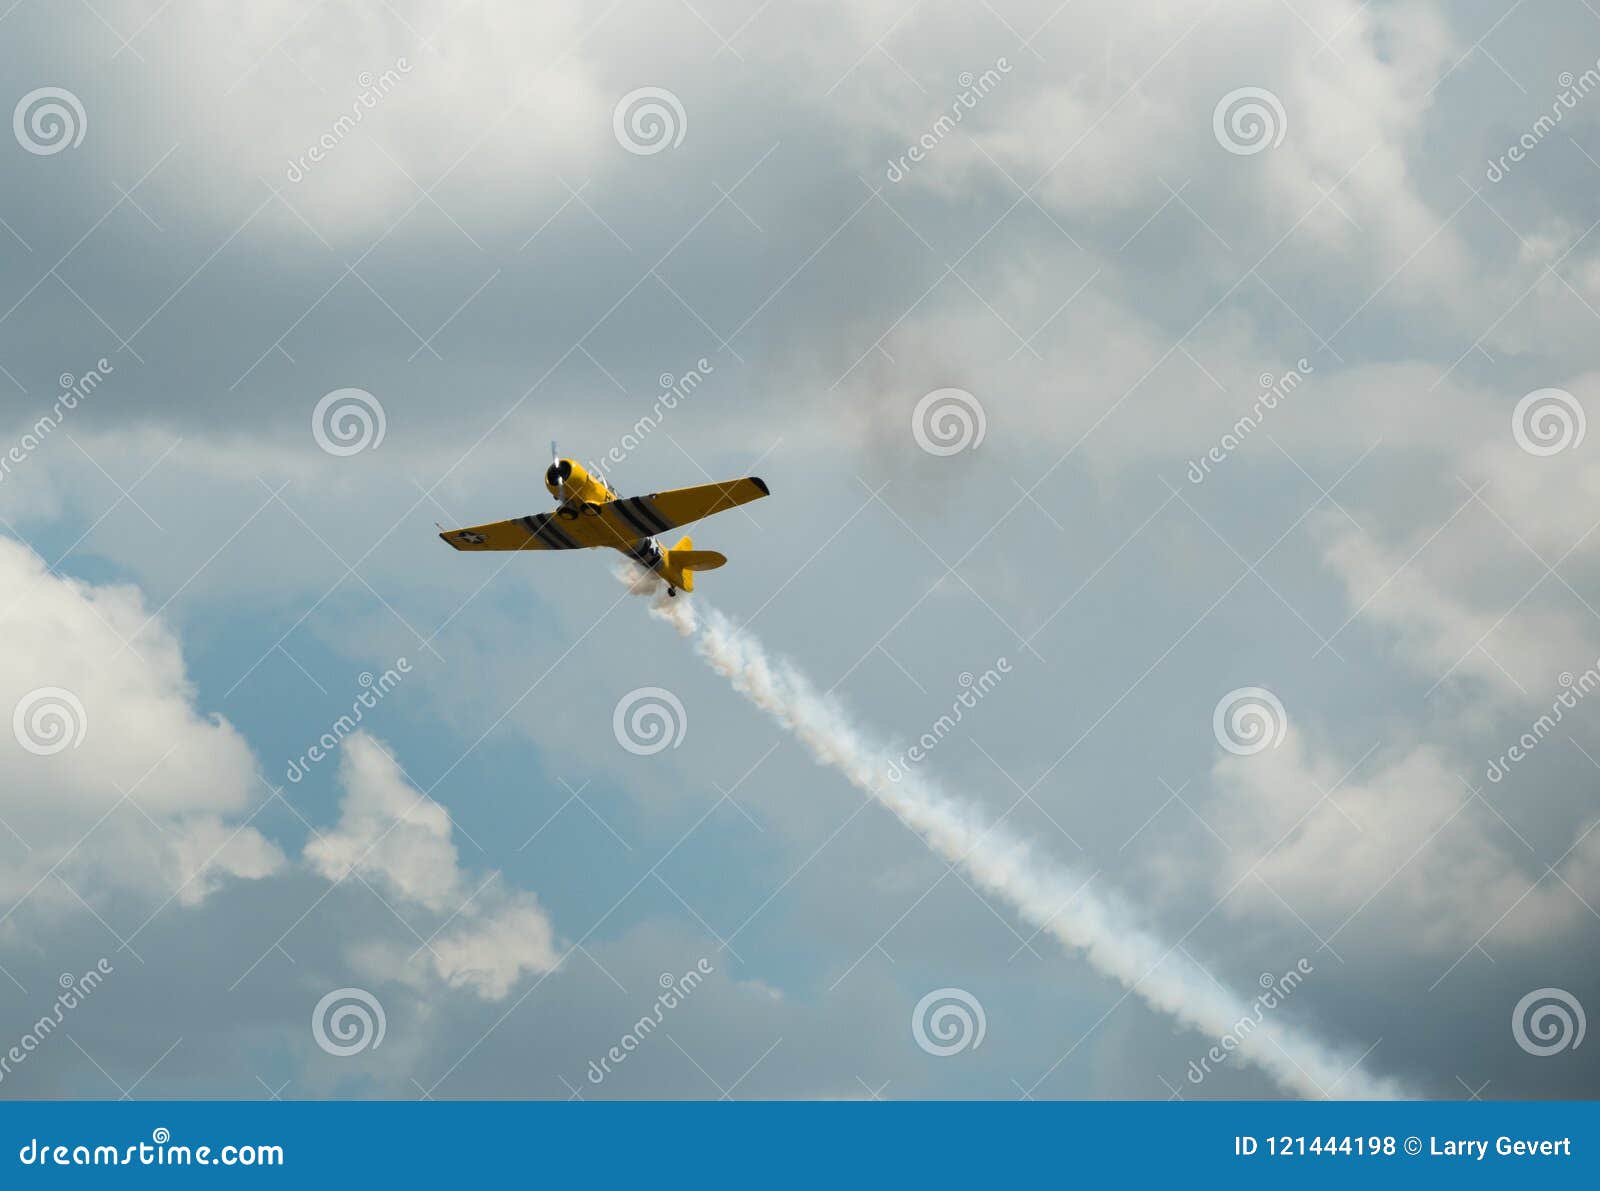 vintage aircraft, air show aerobatics